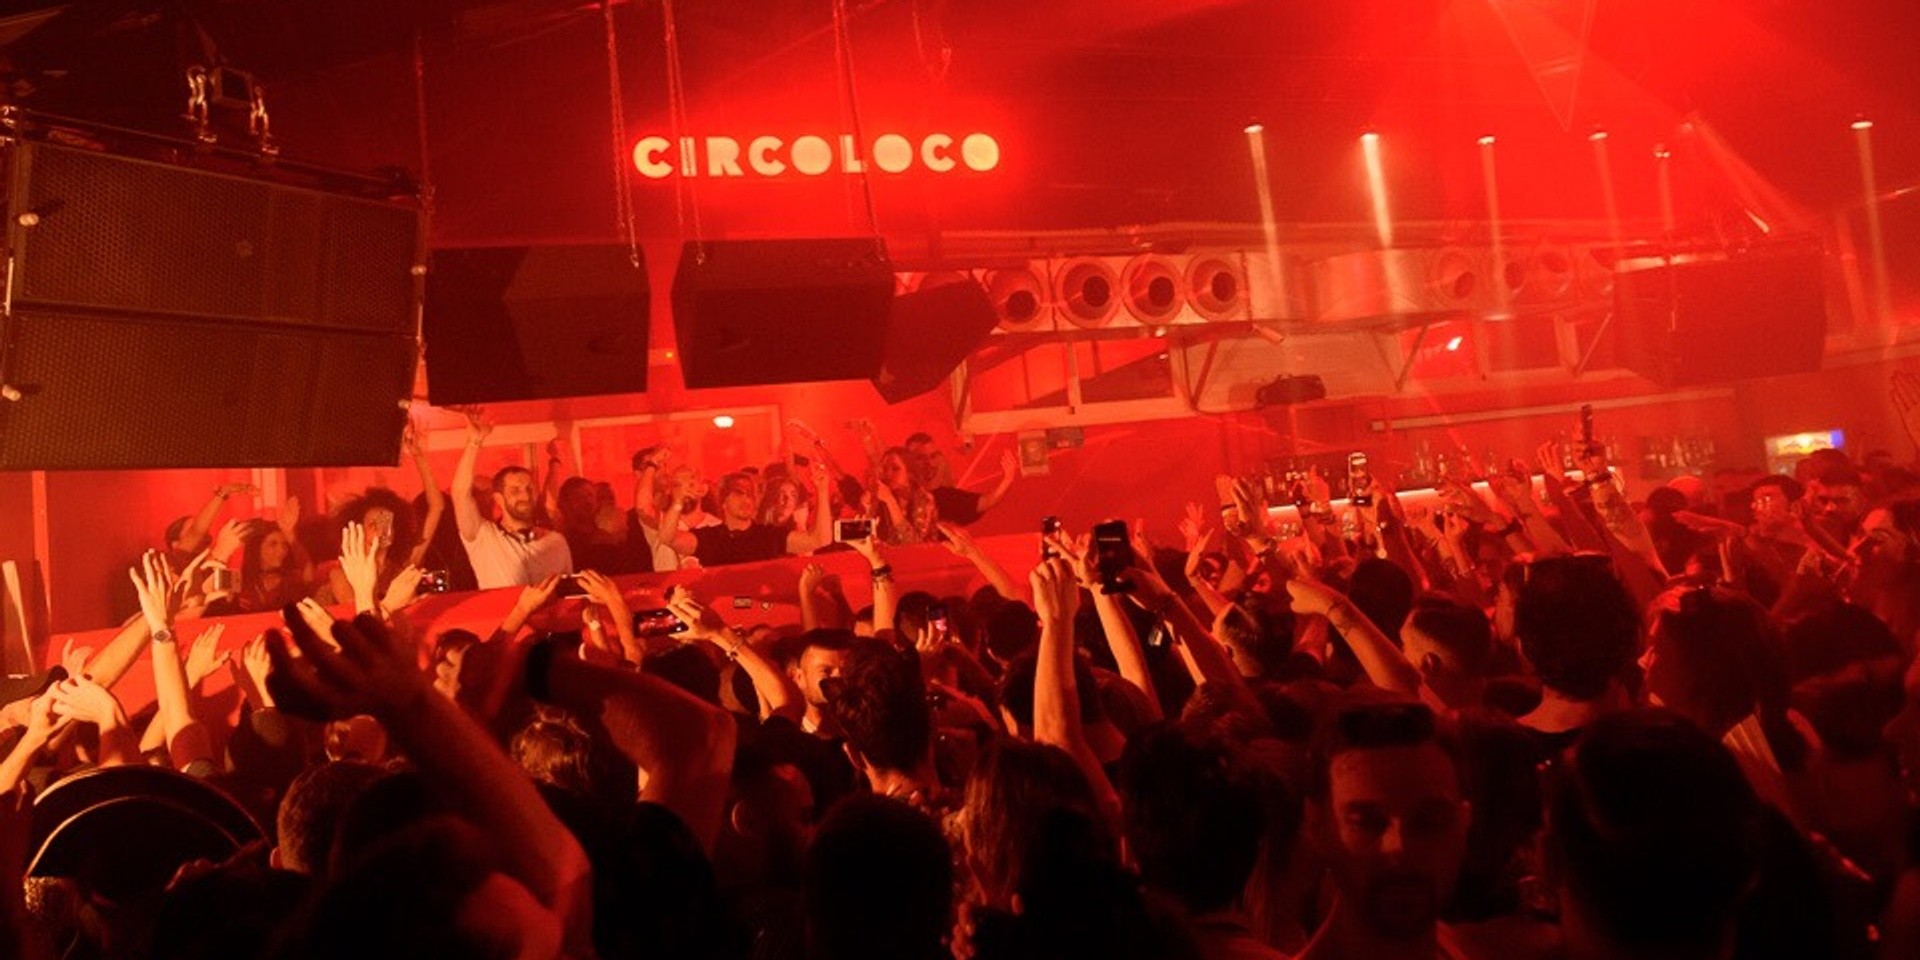 Iconic Ibiza brand Circoloco to make Southeast Asia debut in 2019 